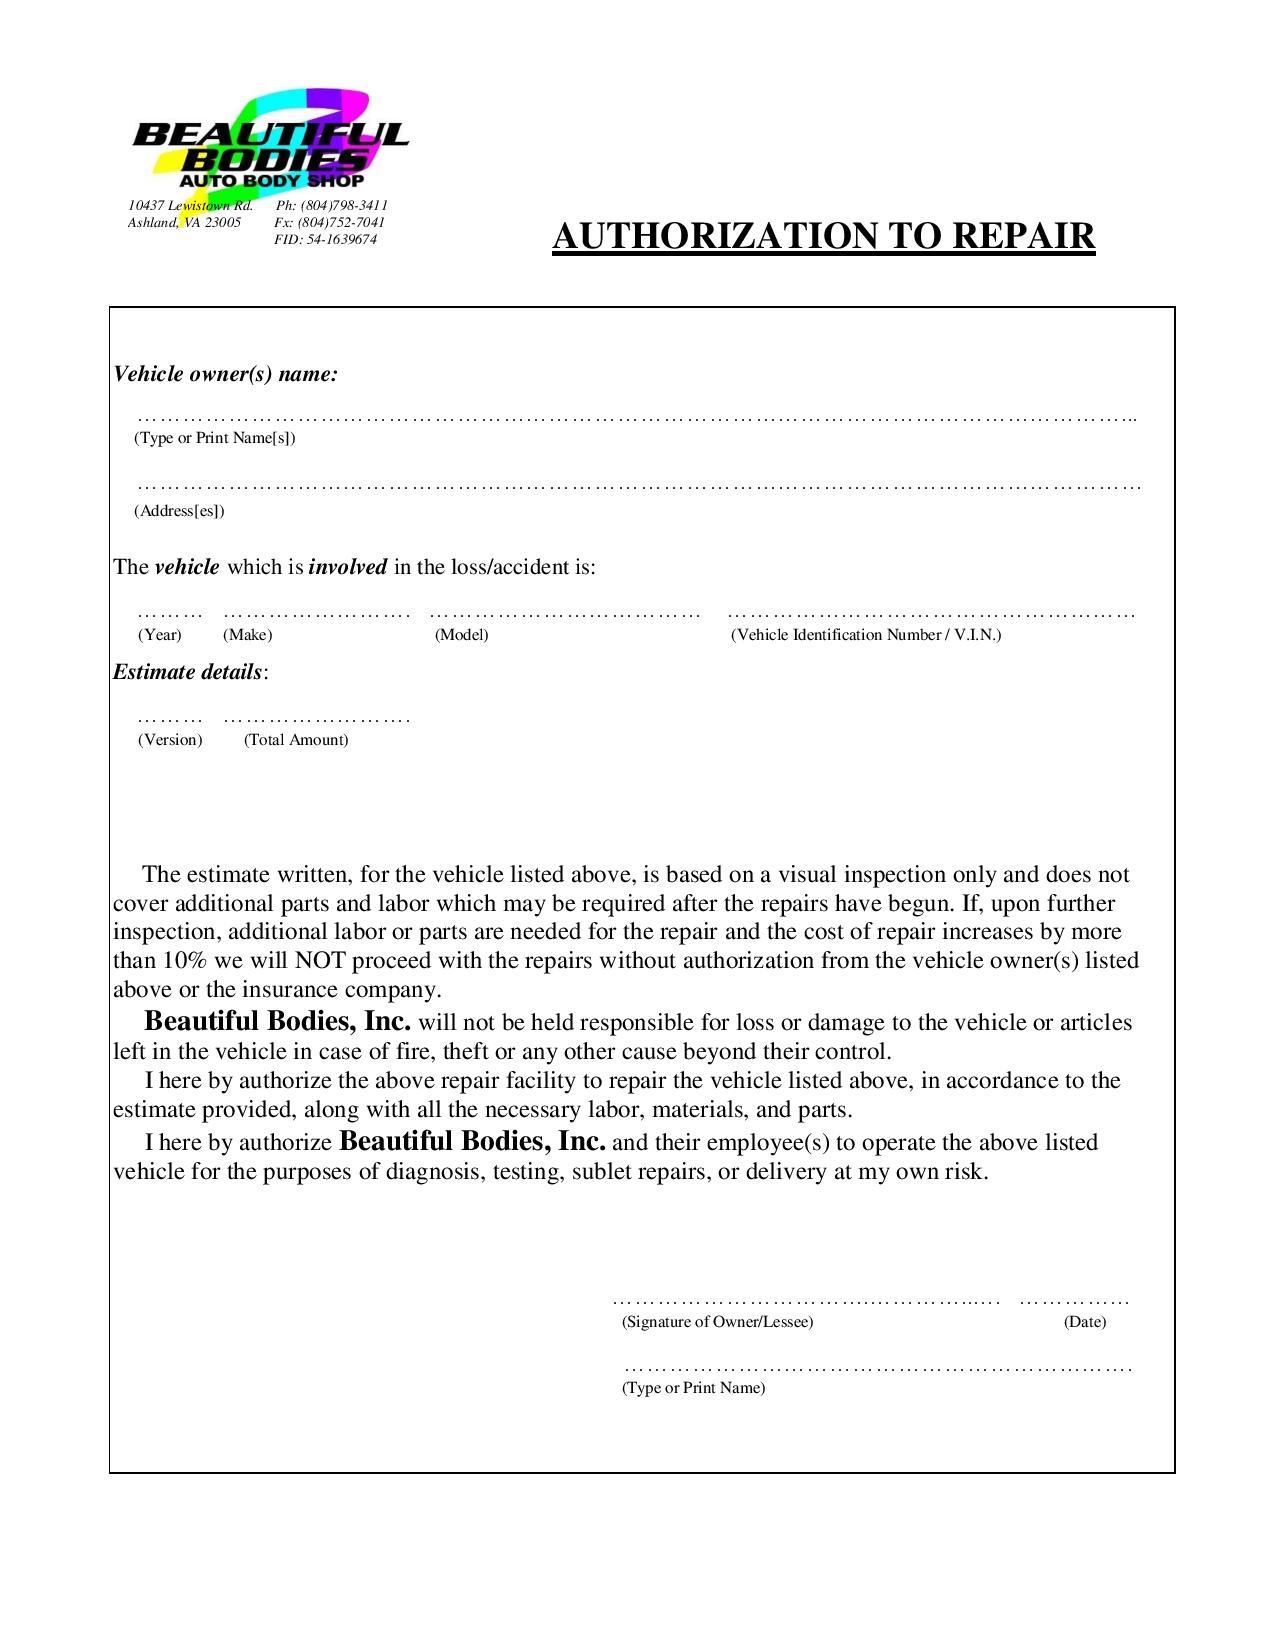 Authorization to repair